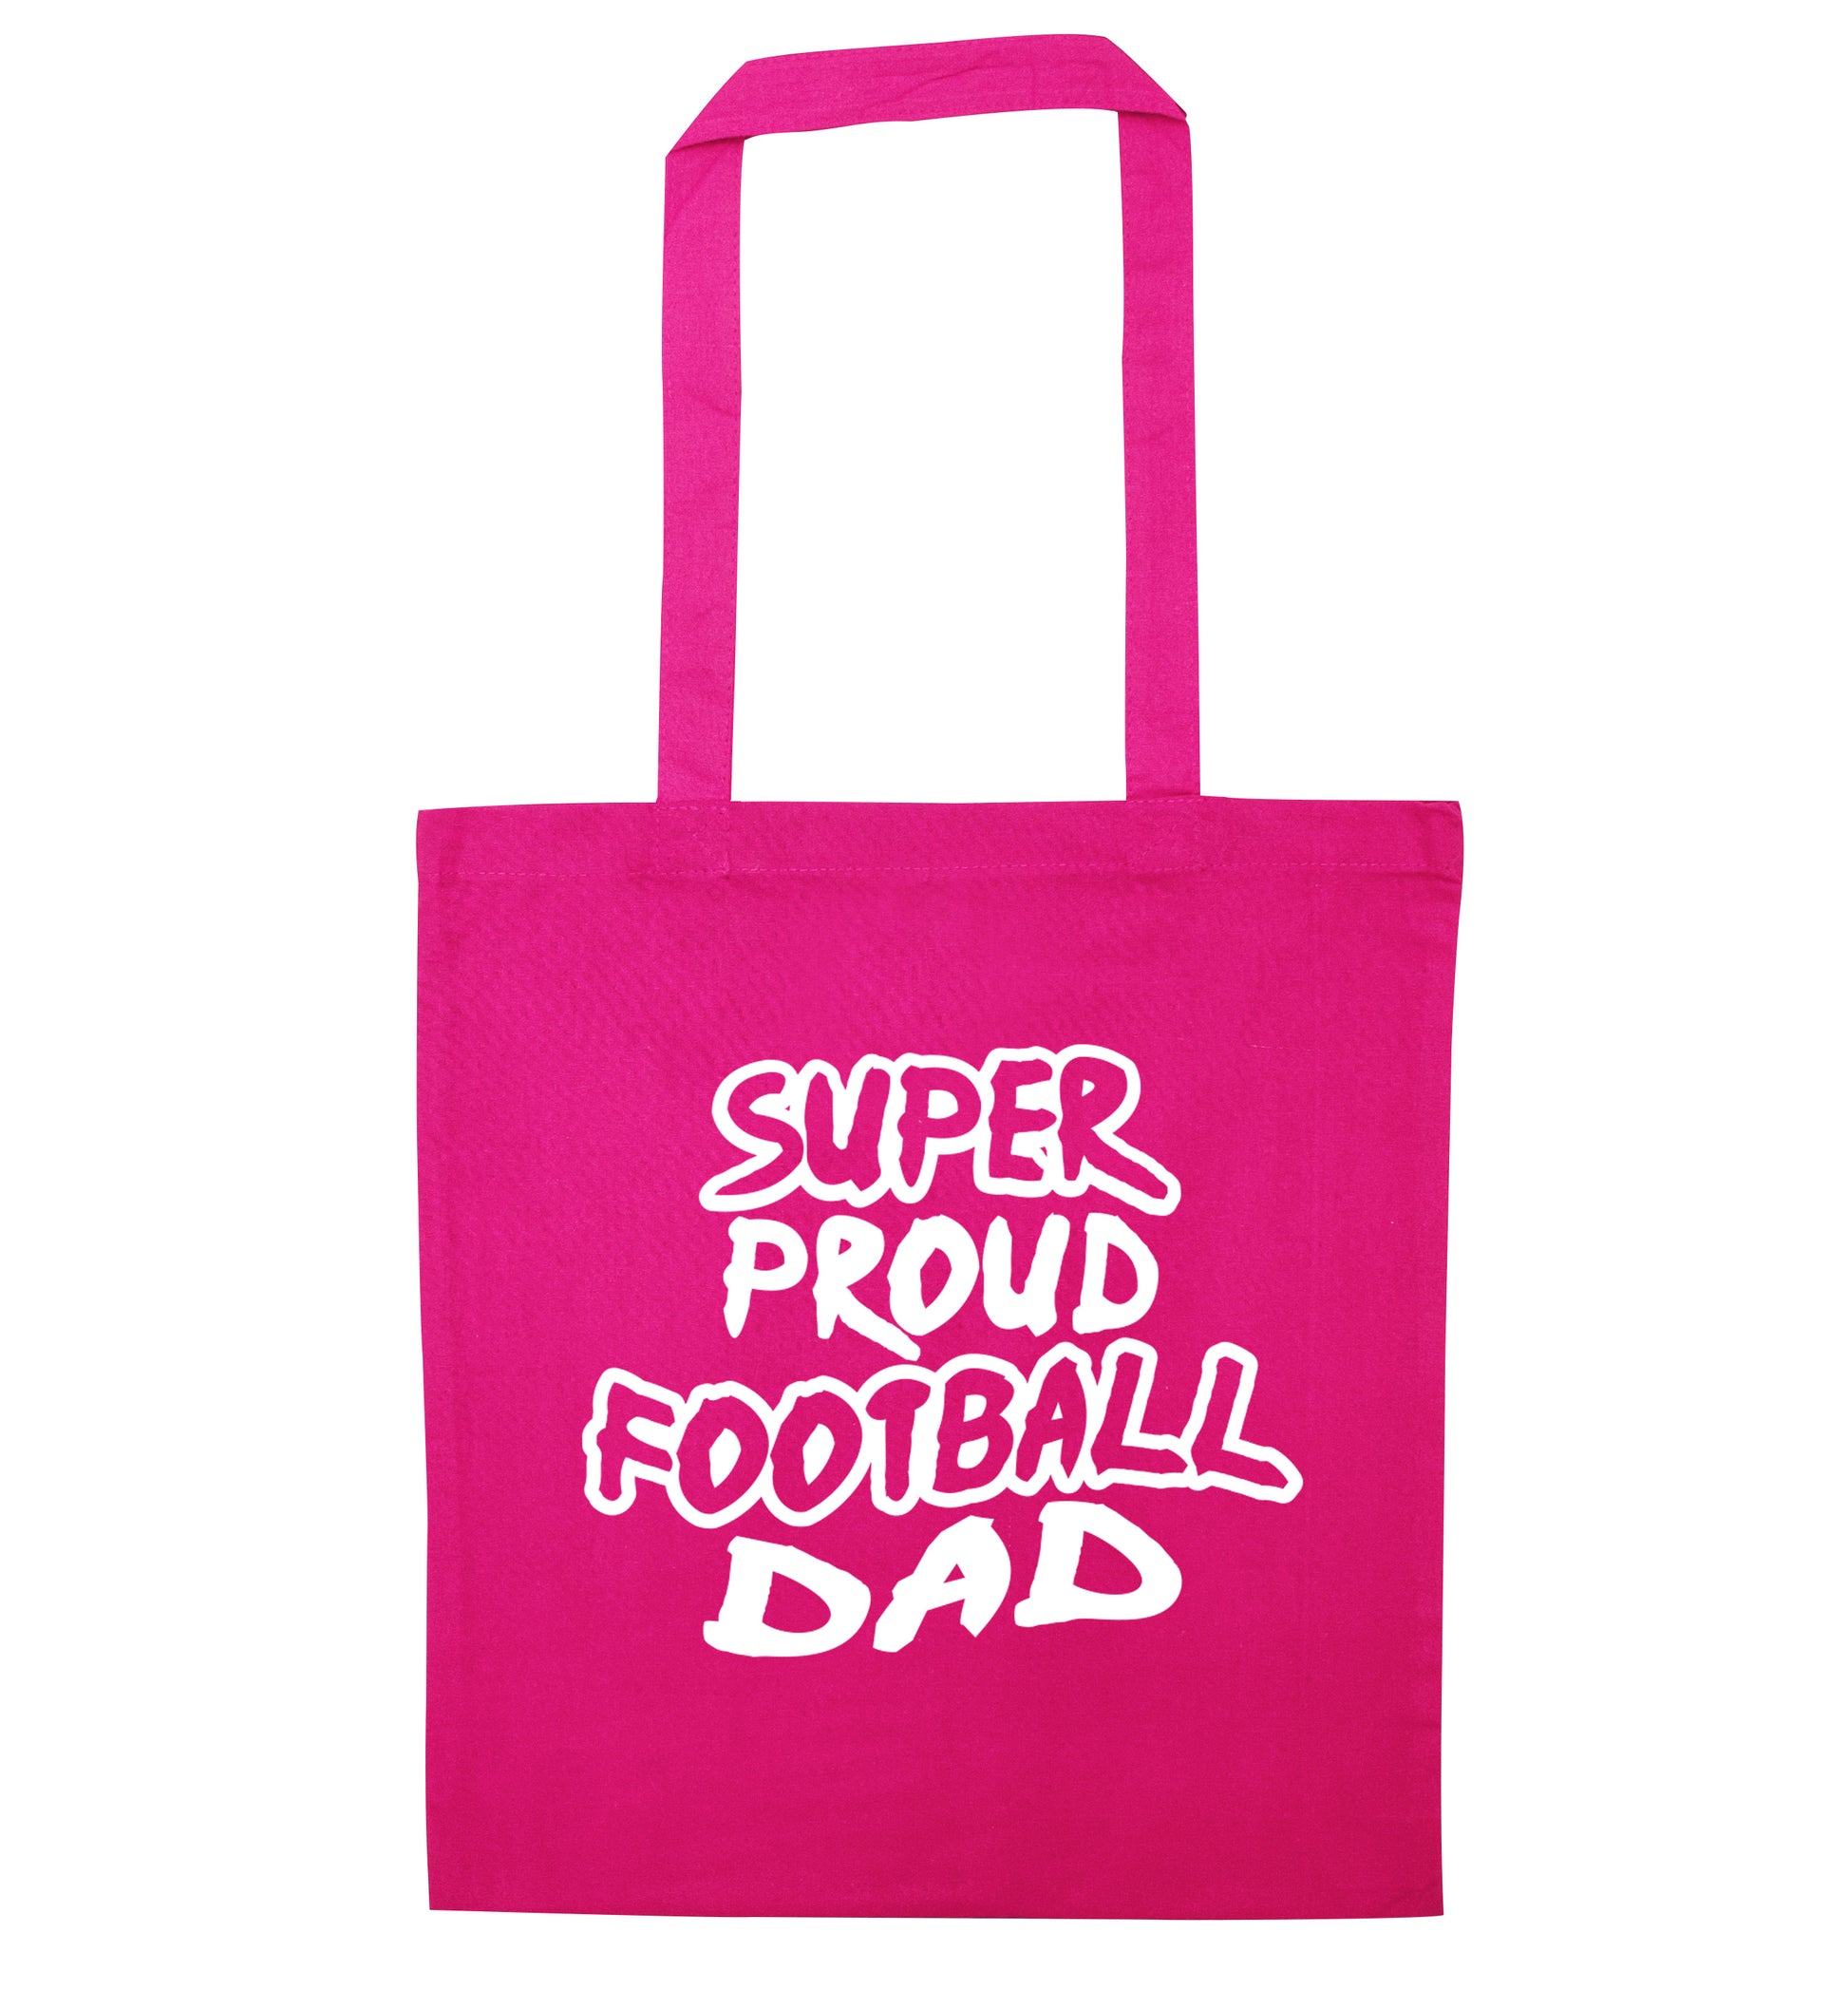 Super proud football dad pink tote bag